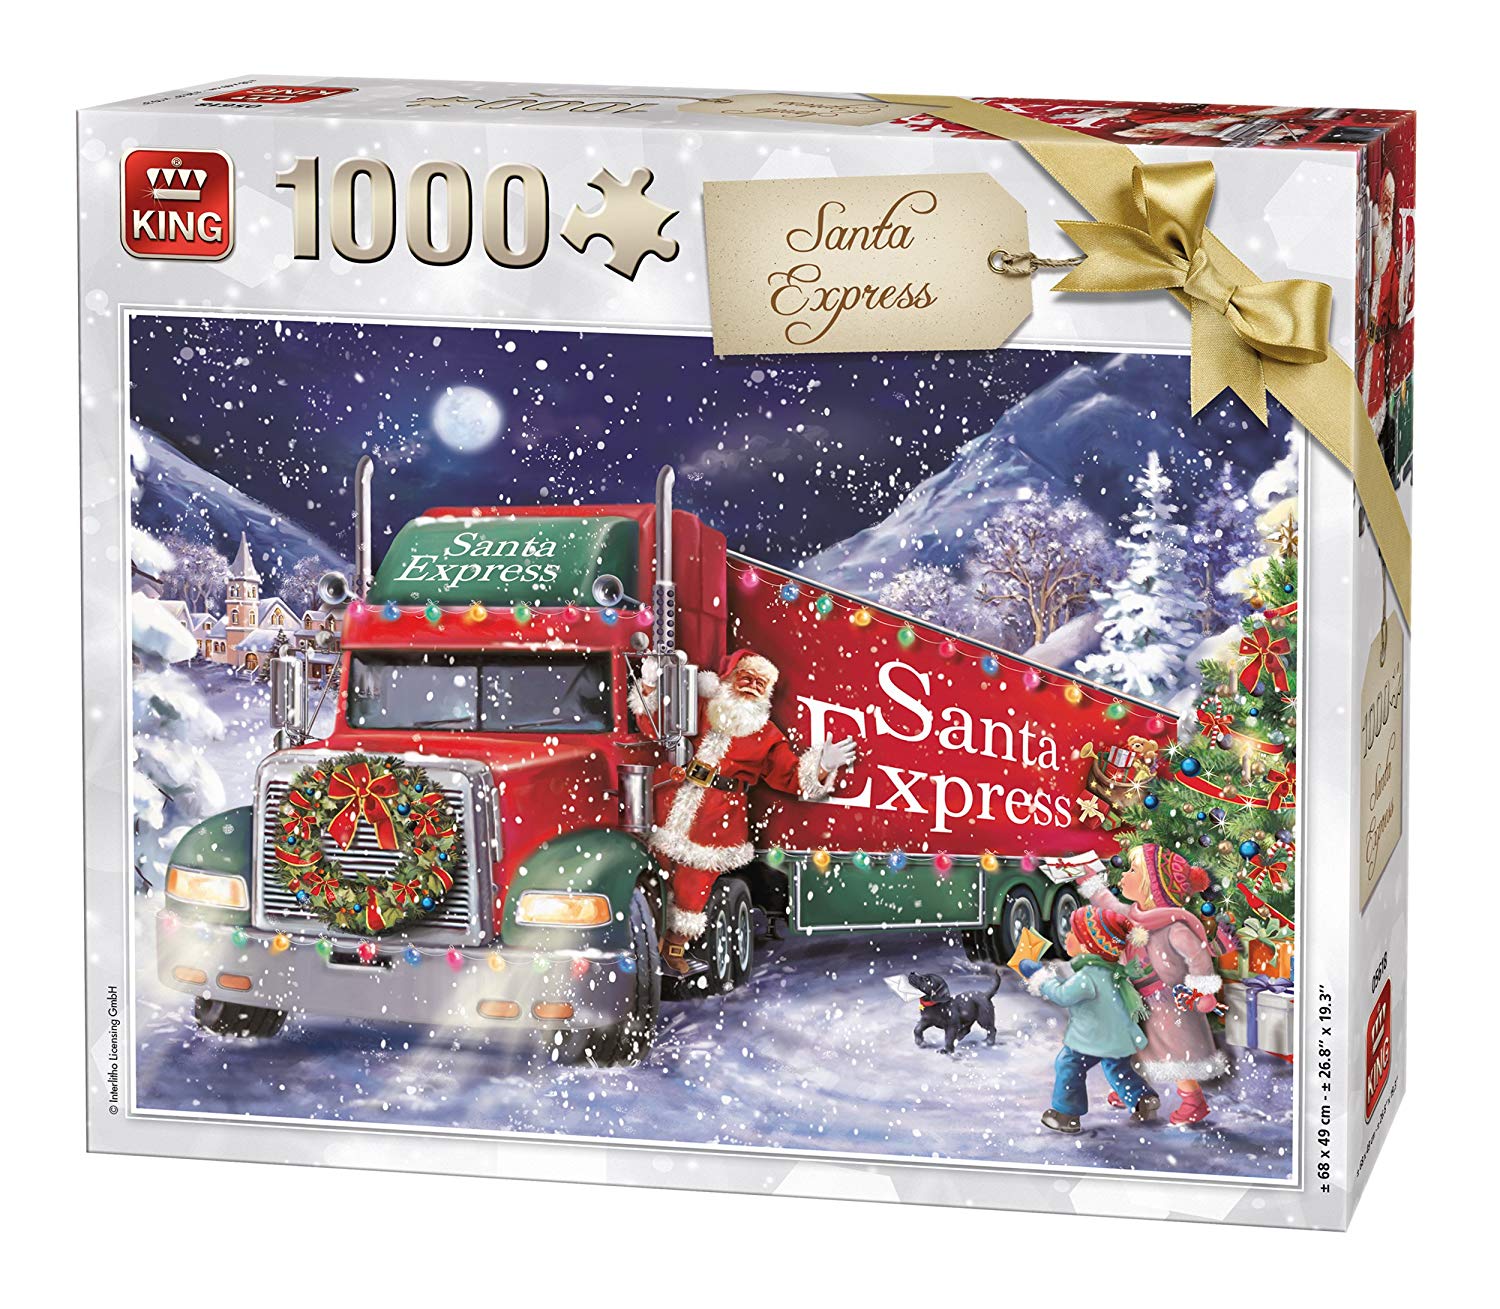 King 5618 Santa Express Jigsaw Puzzle, Christmas Jigsaw Puzzle (1000 Pieces